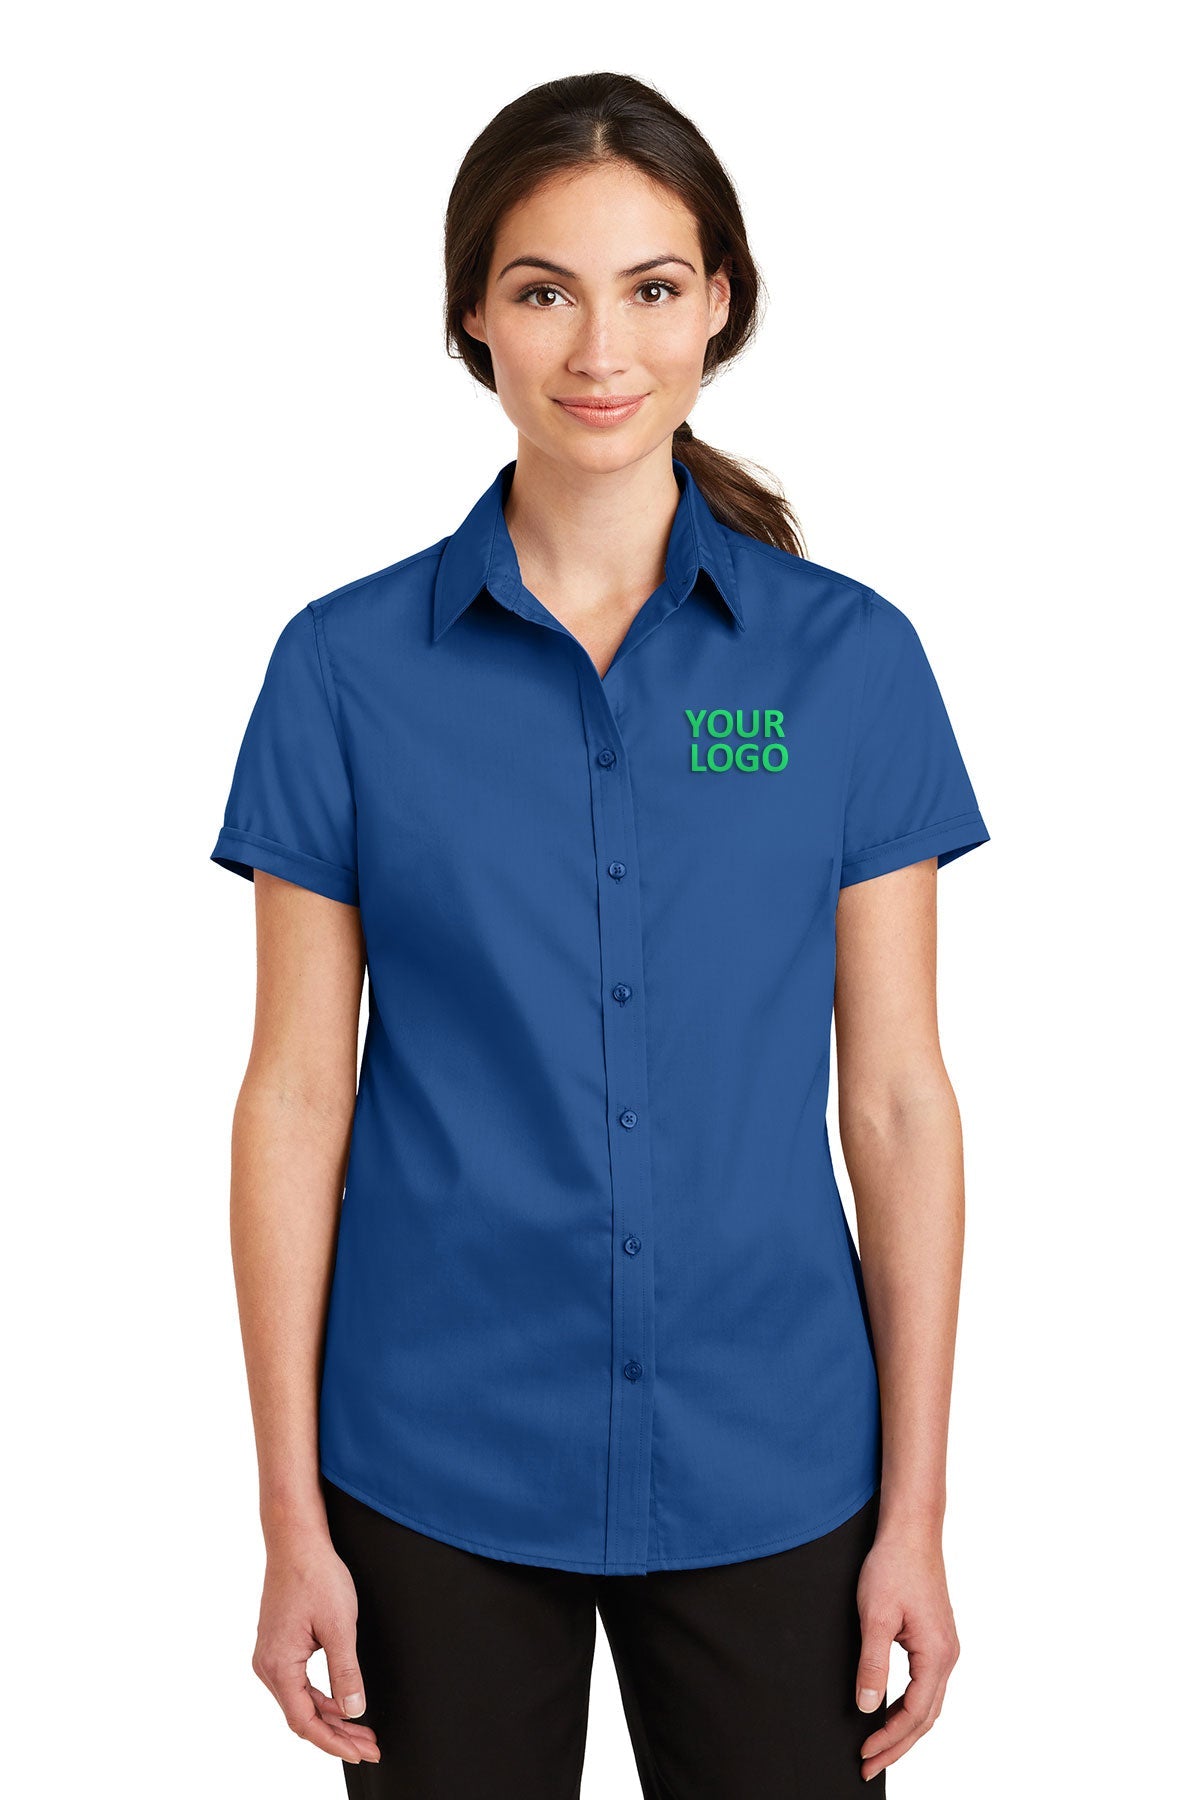 Port Authority True Blue L664 custom logo shirts